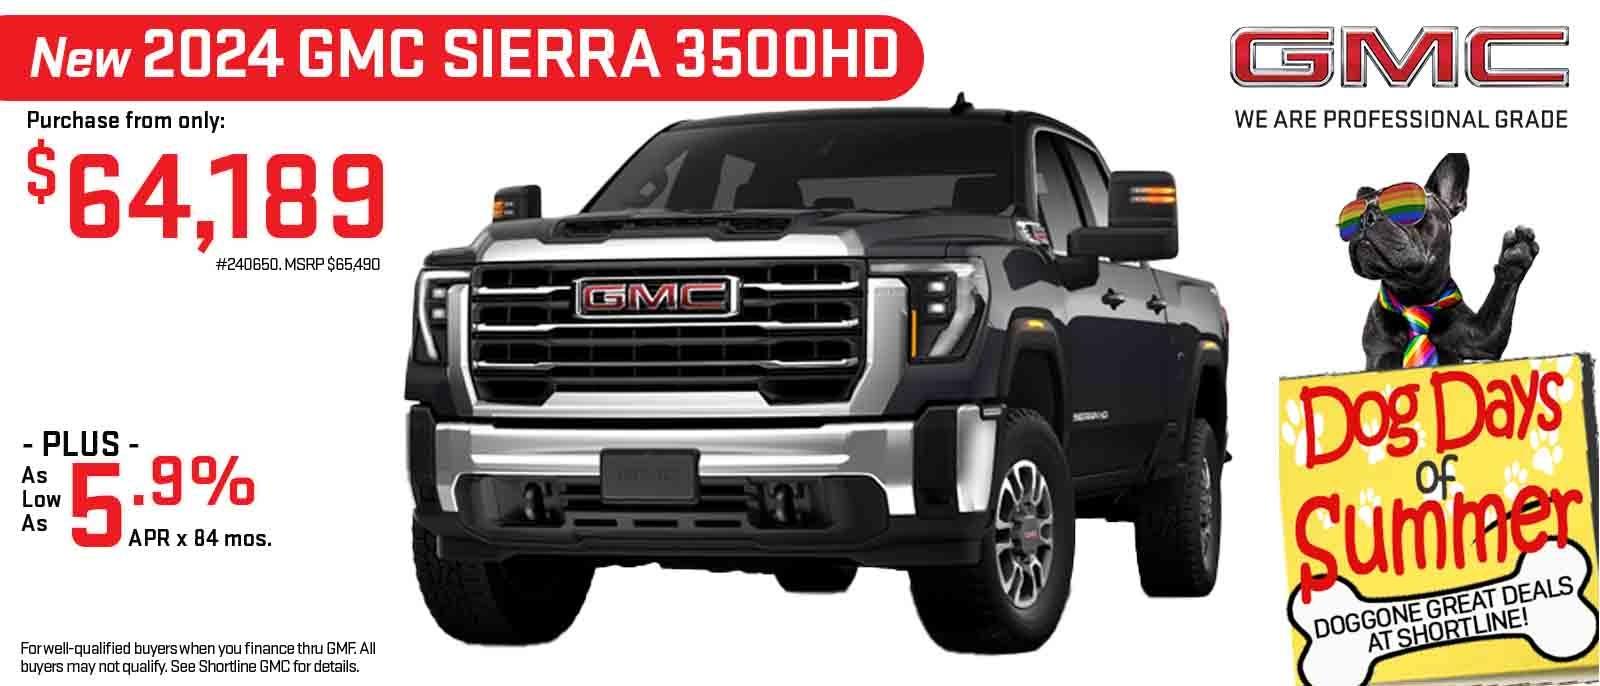 View GMC Sierra 3500HD Special in Denver at Shortline